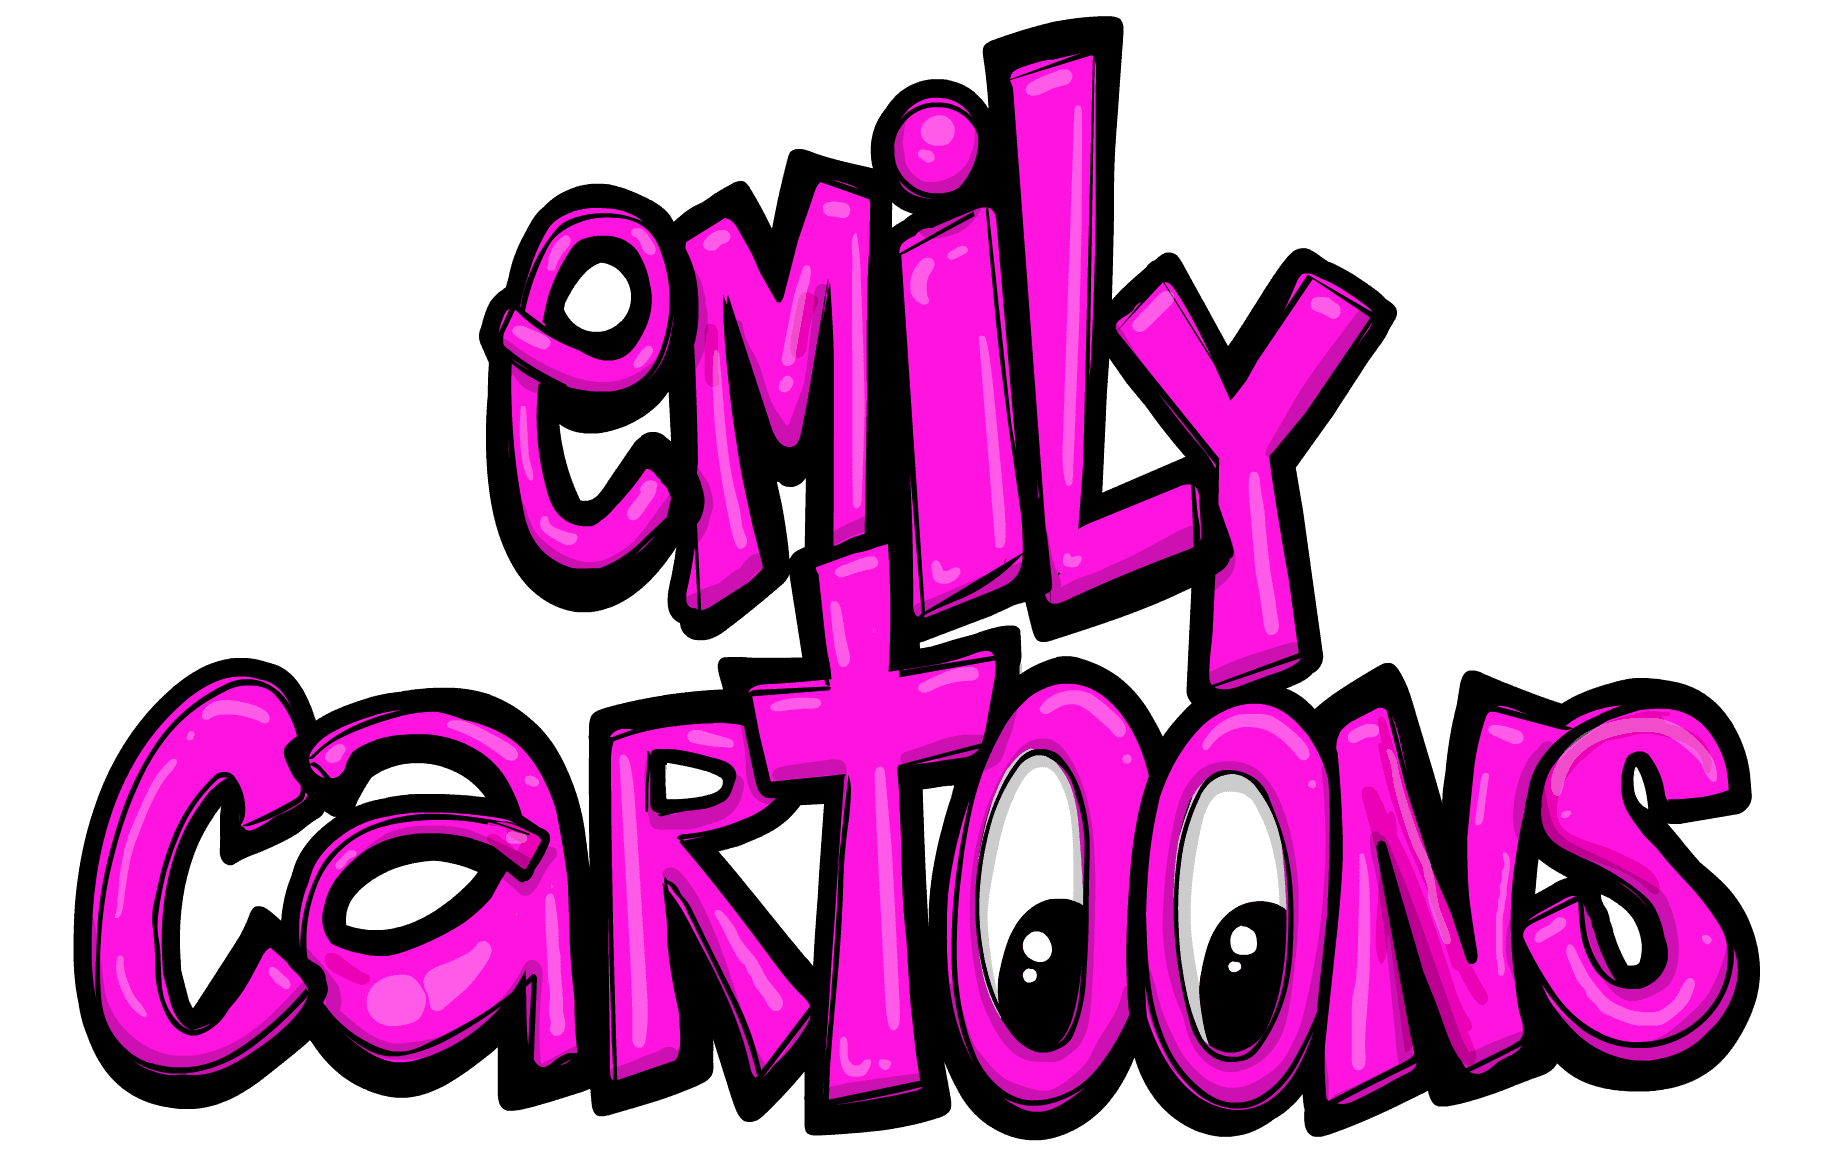 EmilyCartoonsOtherPage banner